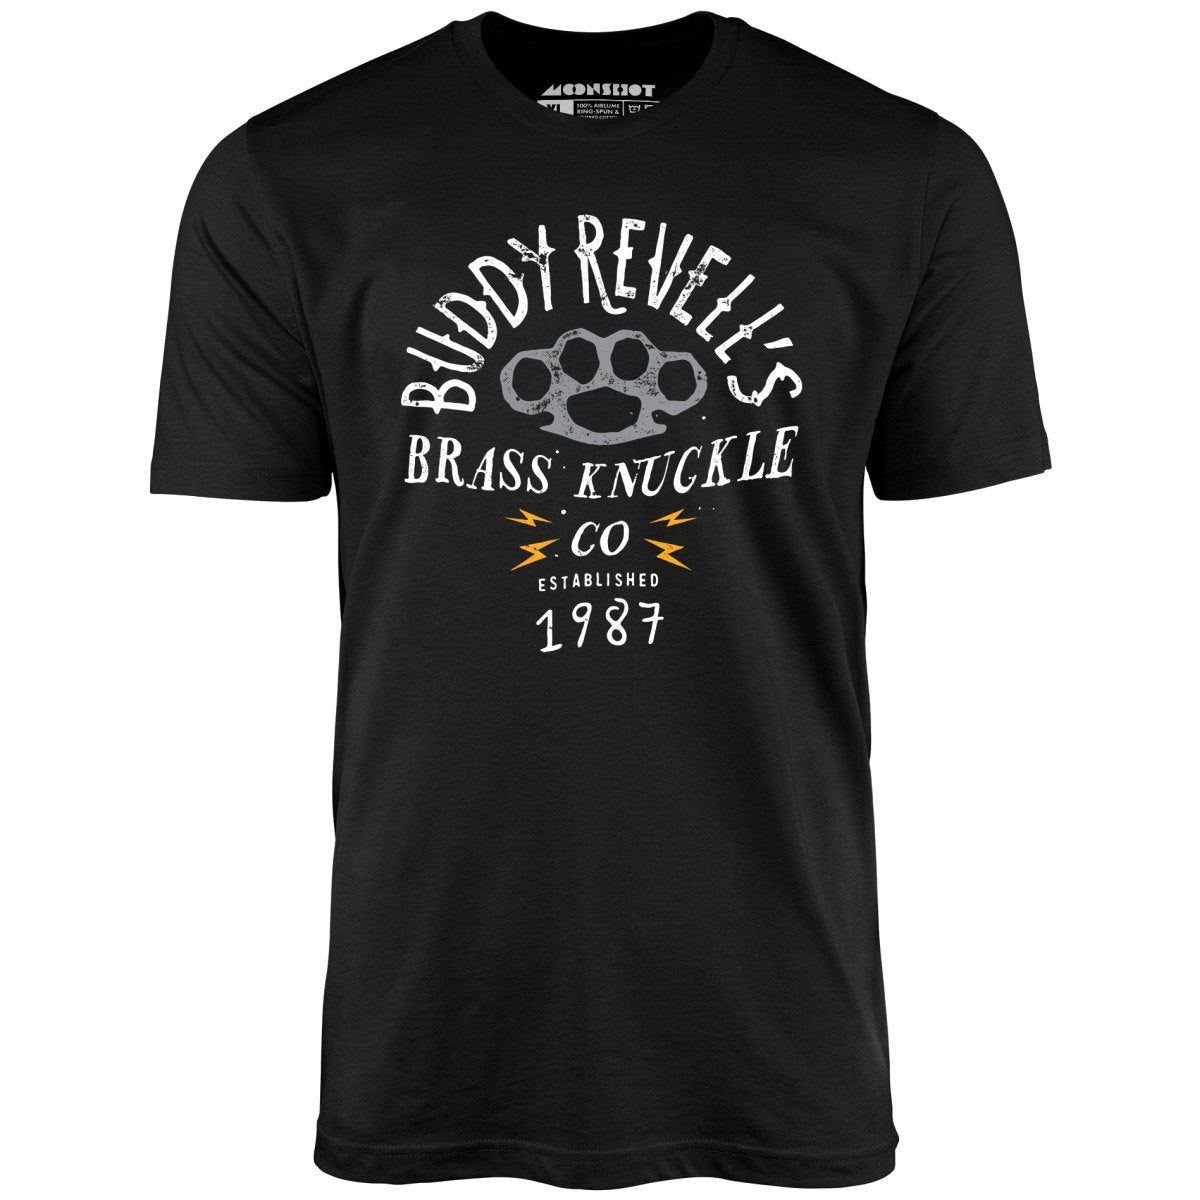 Buddy Revell's Brass Knuckle Co. - Unisex T-Shirt